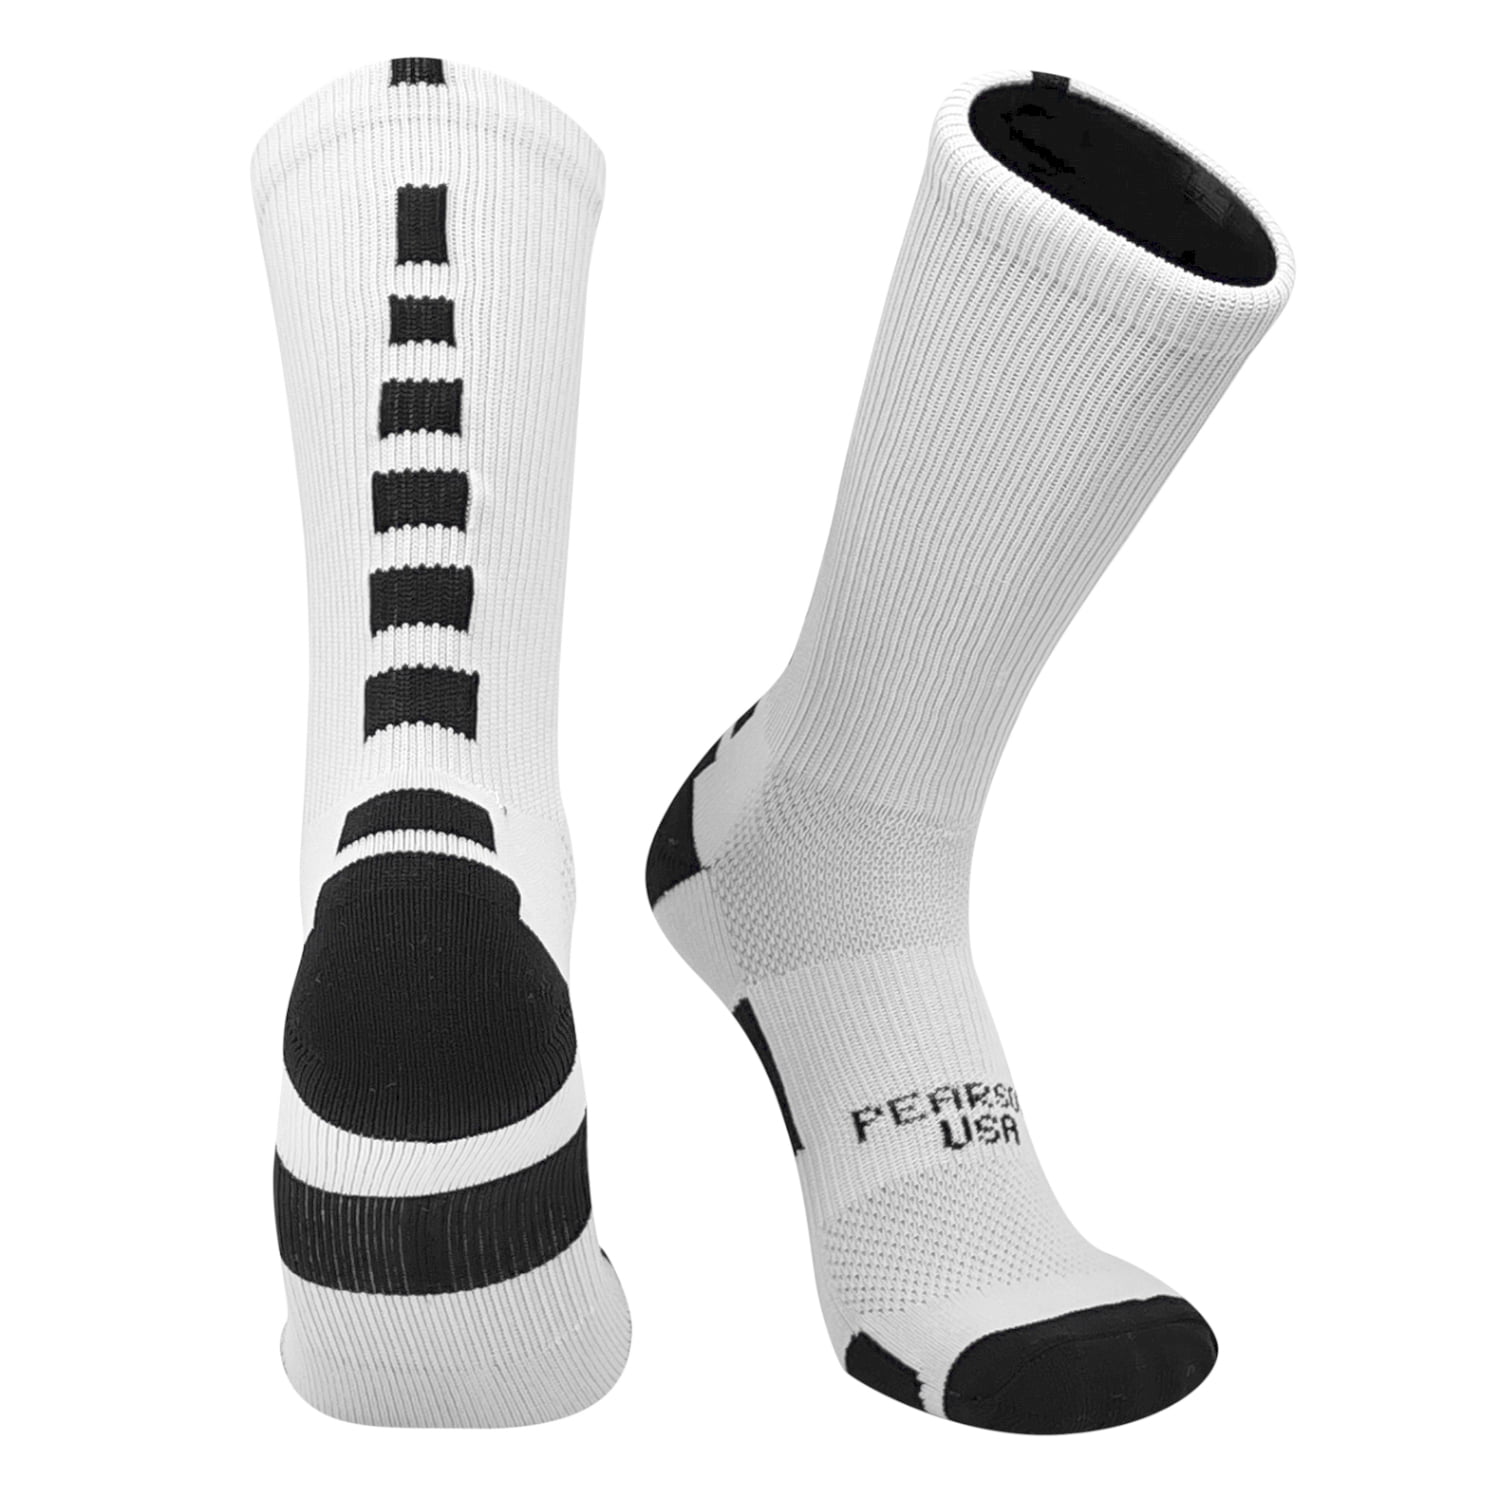 Pearsox Bolt Basketball Football Volleyball Crew Socks - White, Black ...